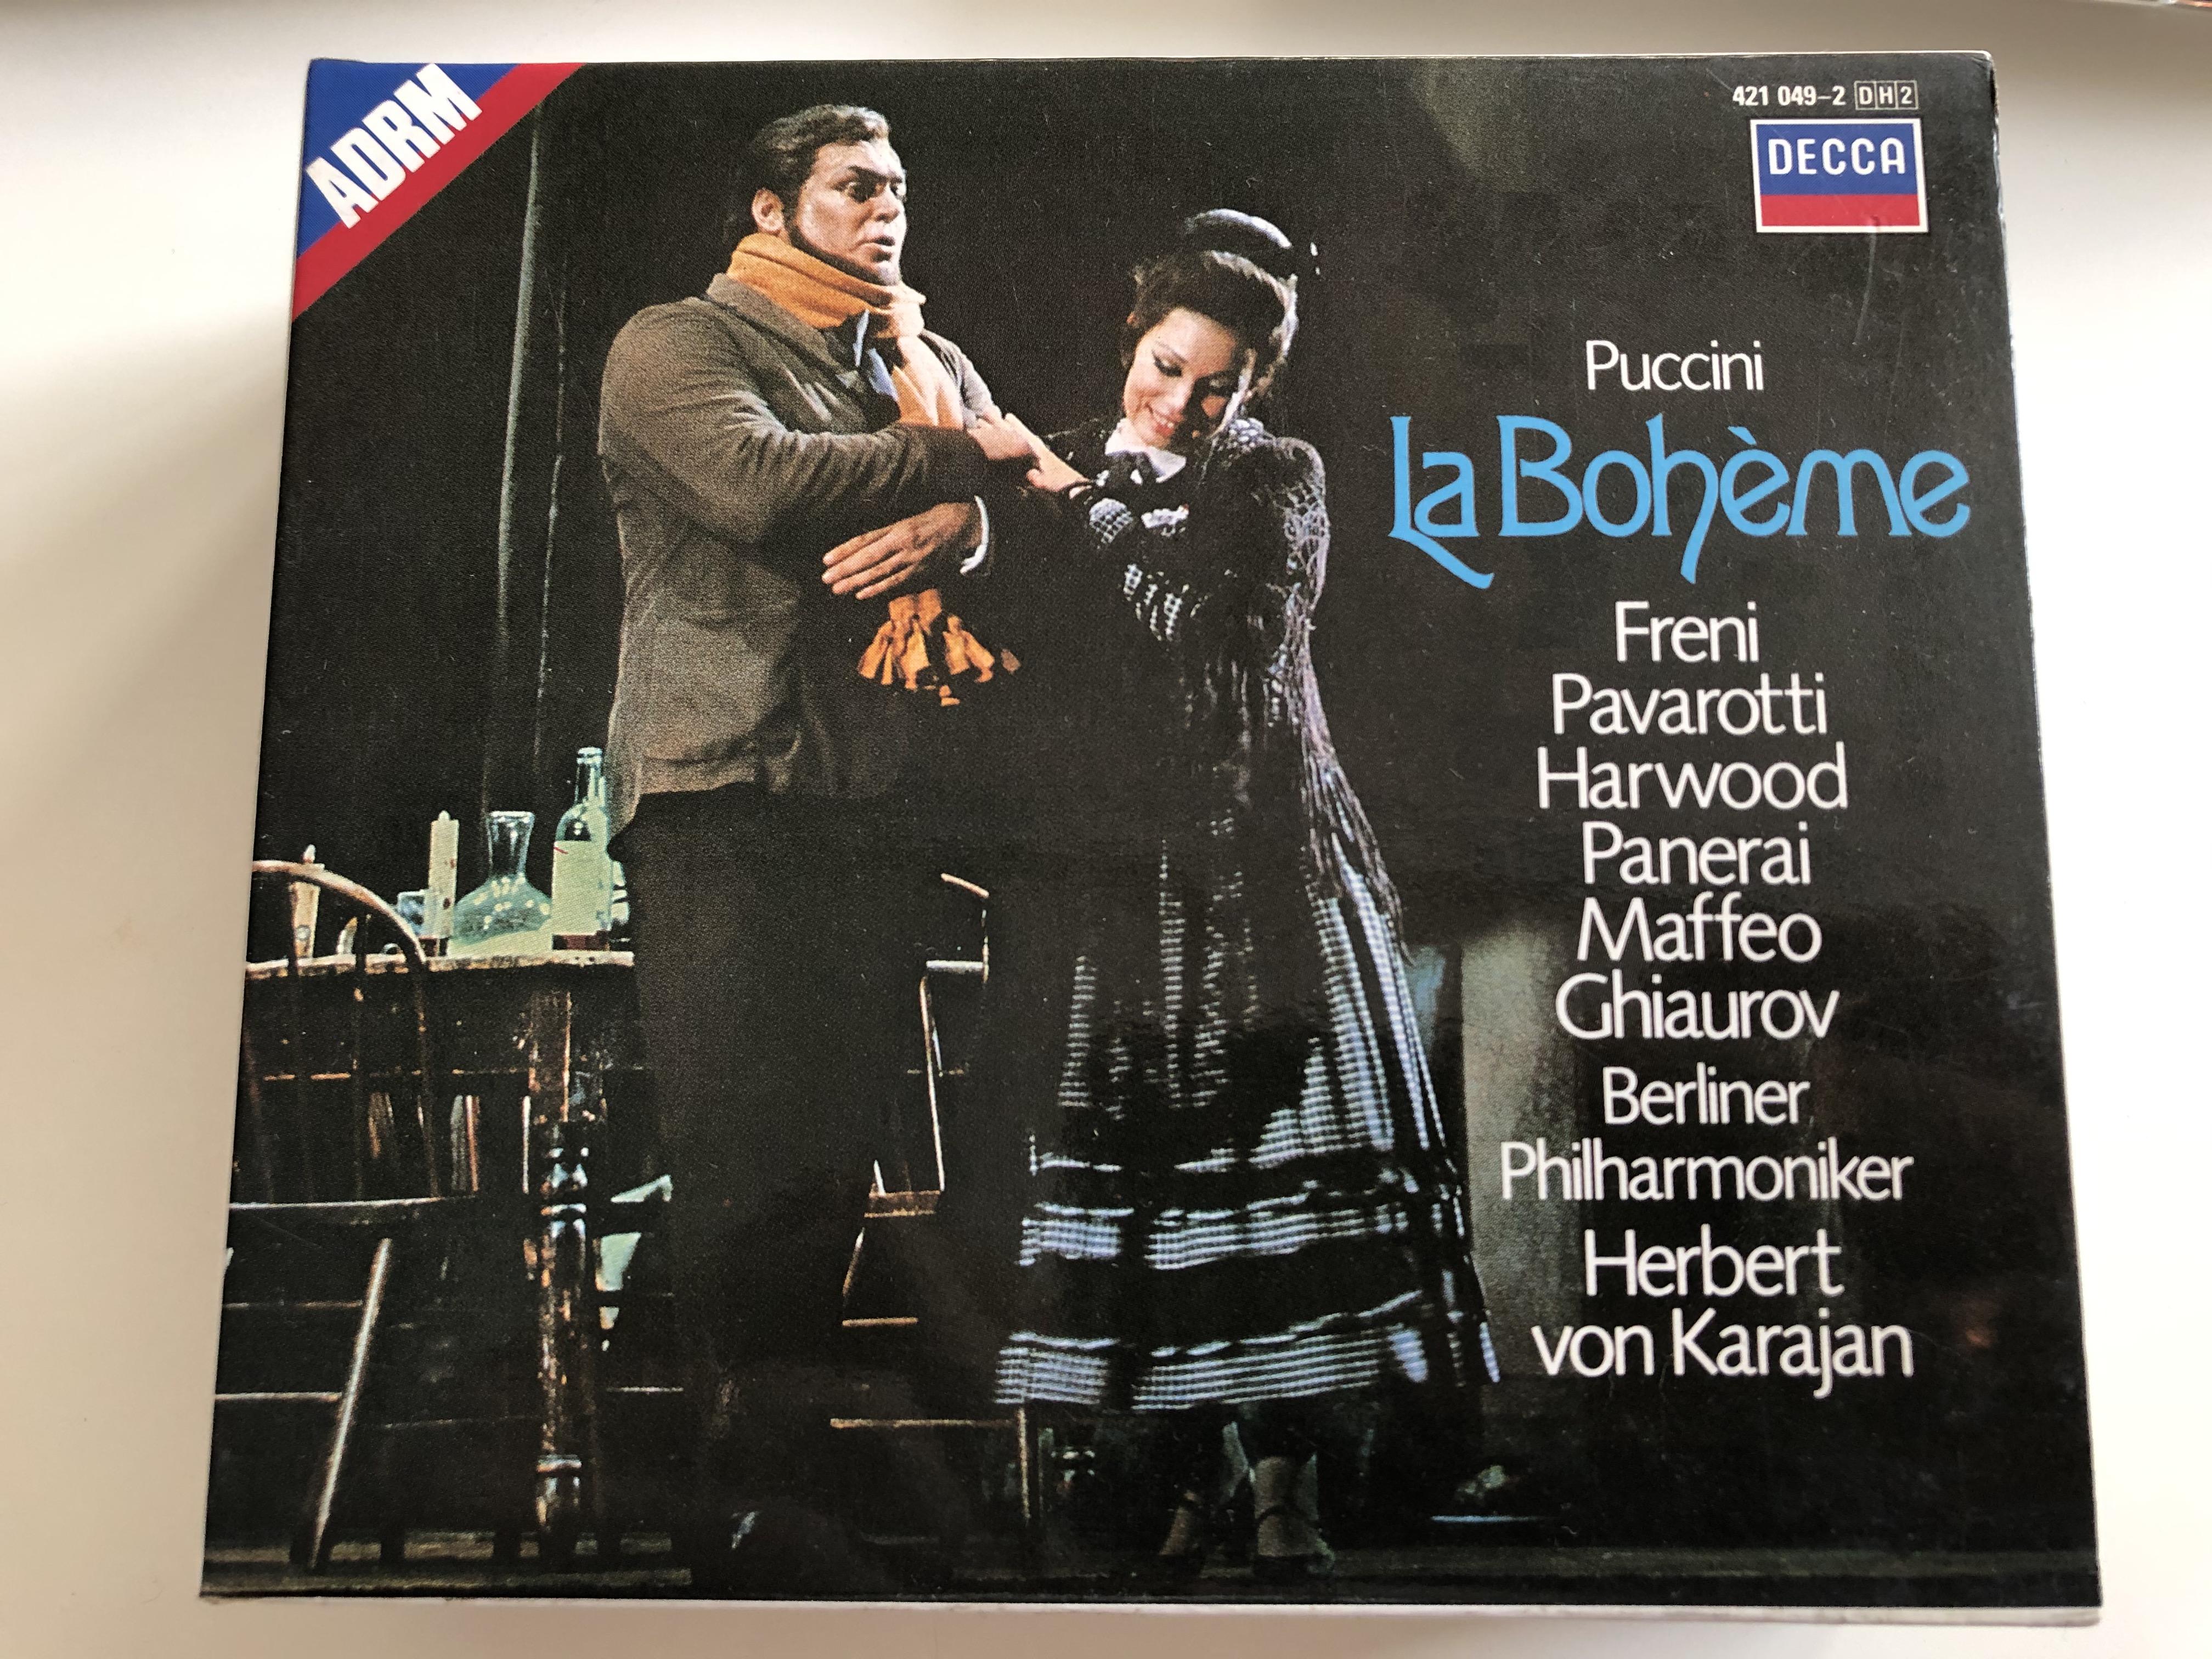 puccini-la-boh-me-freni-pavarotti-harwood-panerai-maffeo-ghiaurov-berliner-philharmoniker-herbert-karajan-decca-2x-audio-cd-stereo-421-049-2-1-.jpg